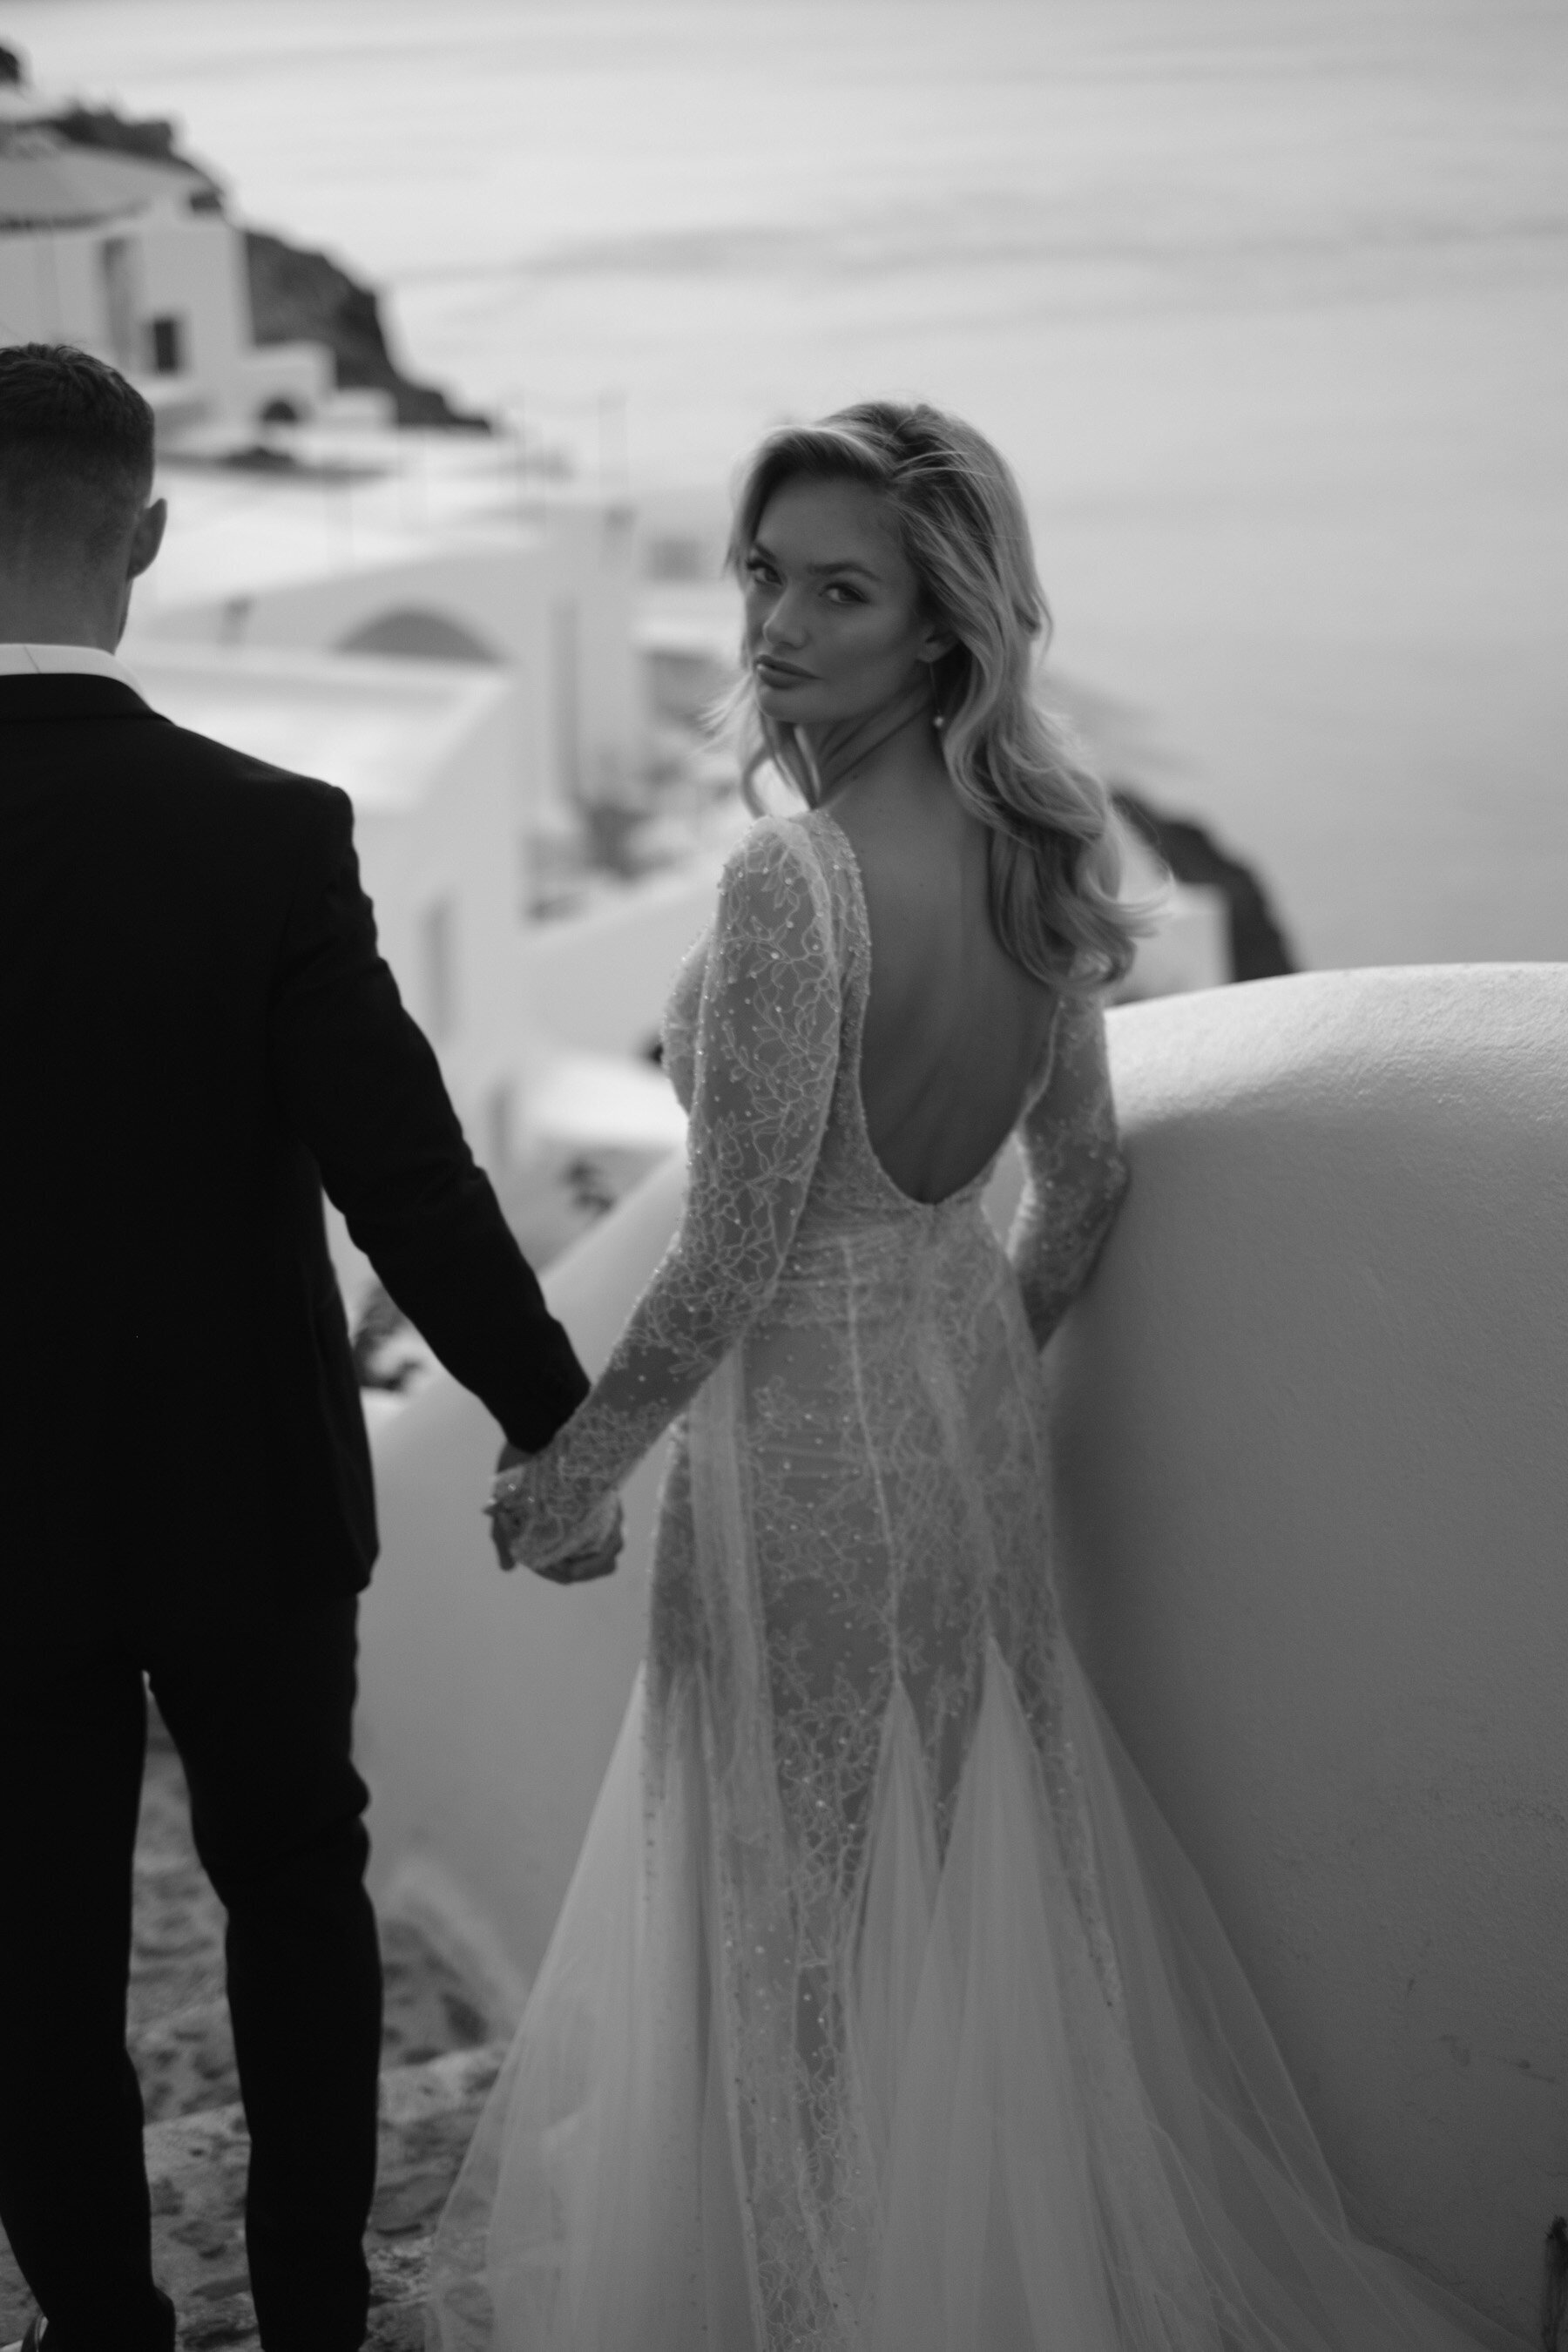 santorini wedding photographer charlotte wise-508